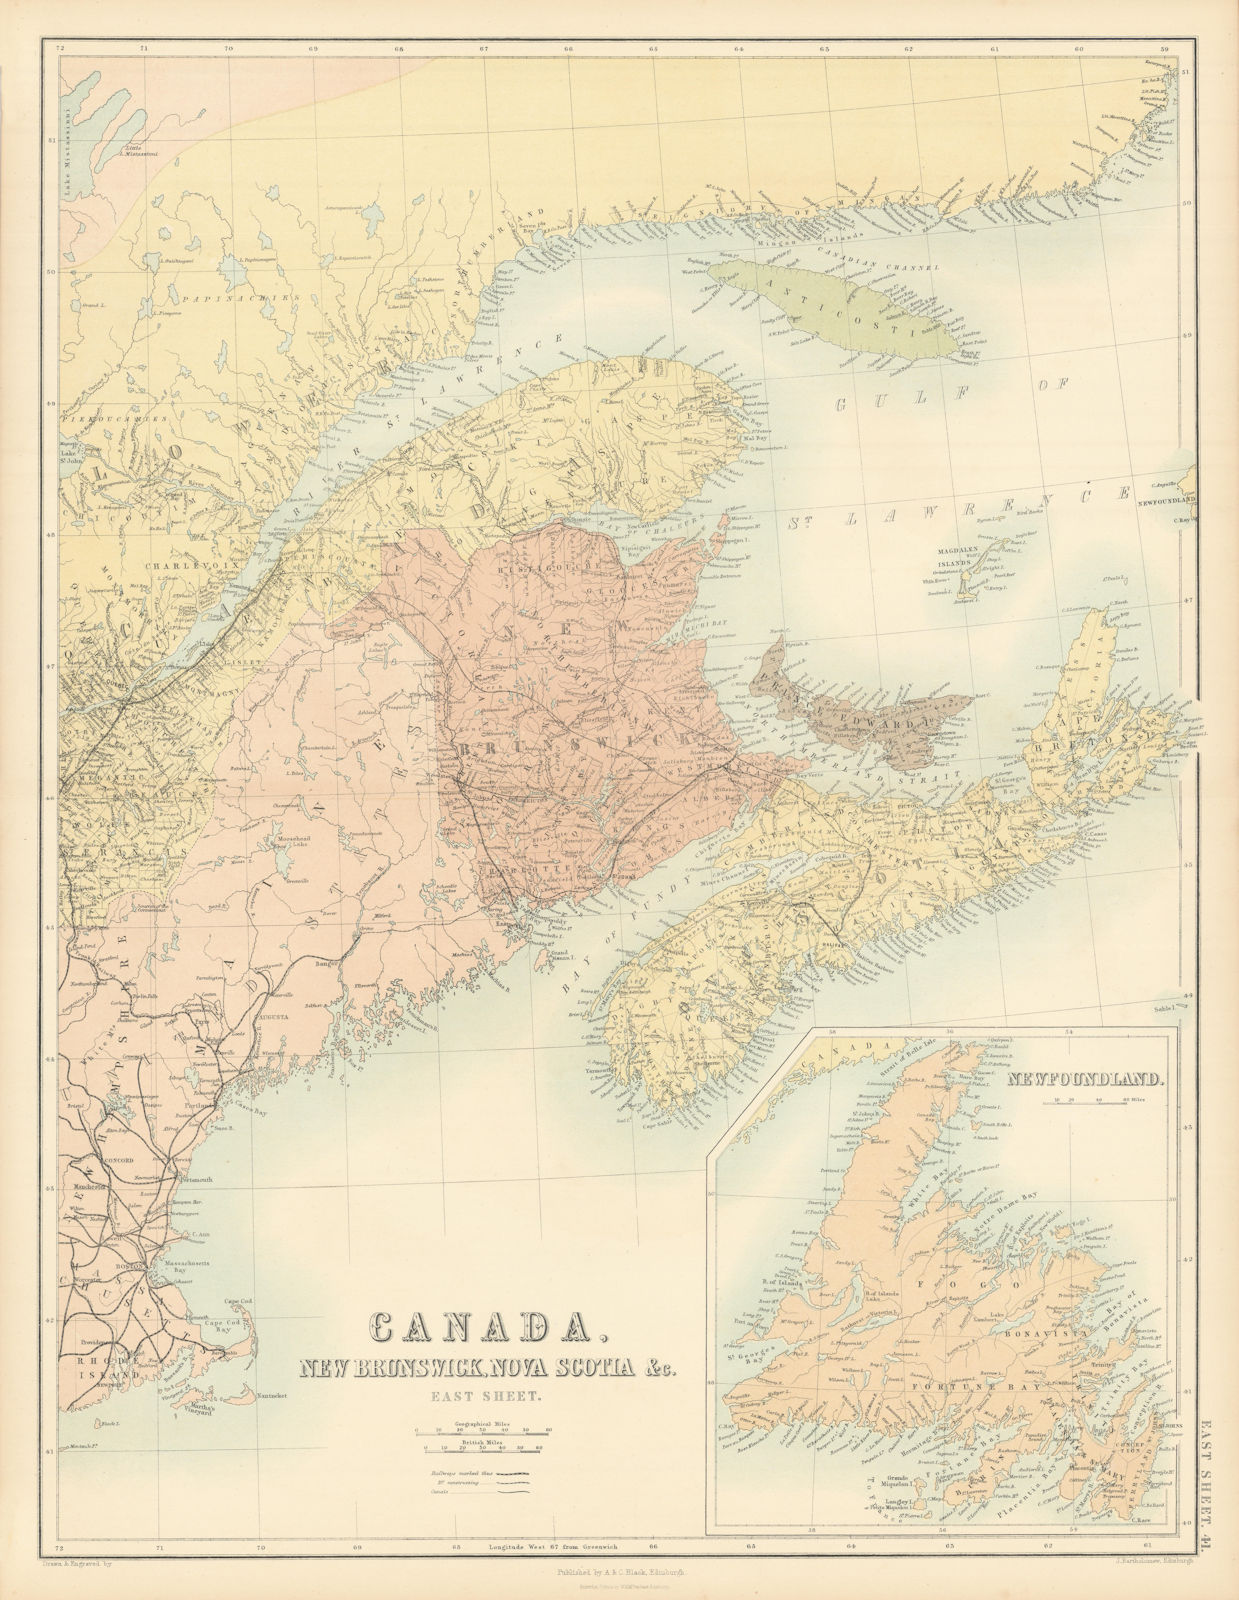 Associate Product Canada East Sheet. Maritimes. St Lawrence NB Nova Scotia Newfoundland 1862 map